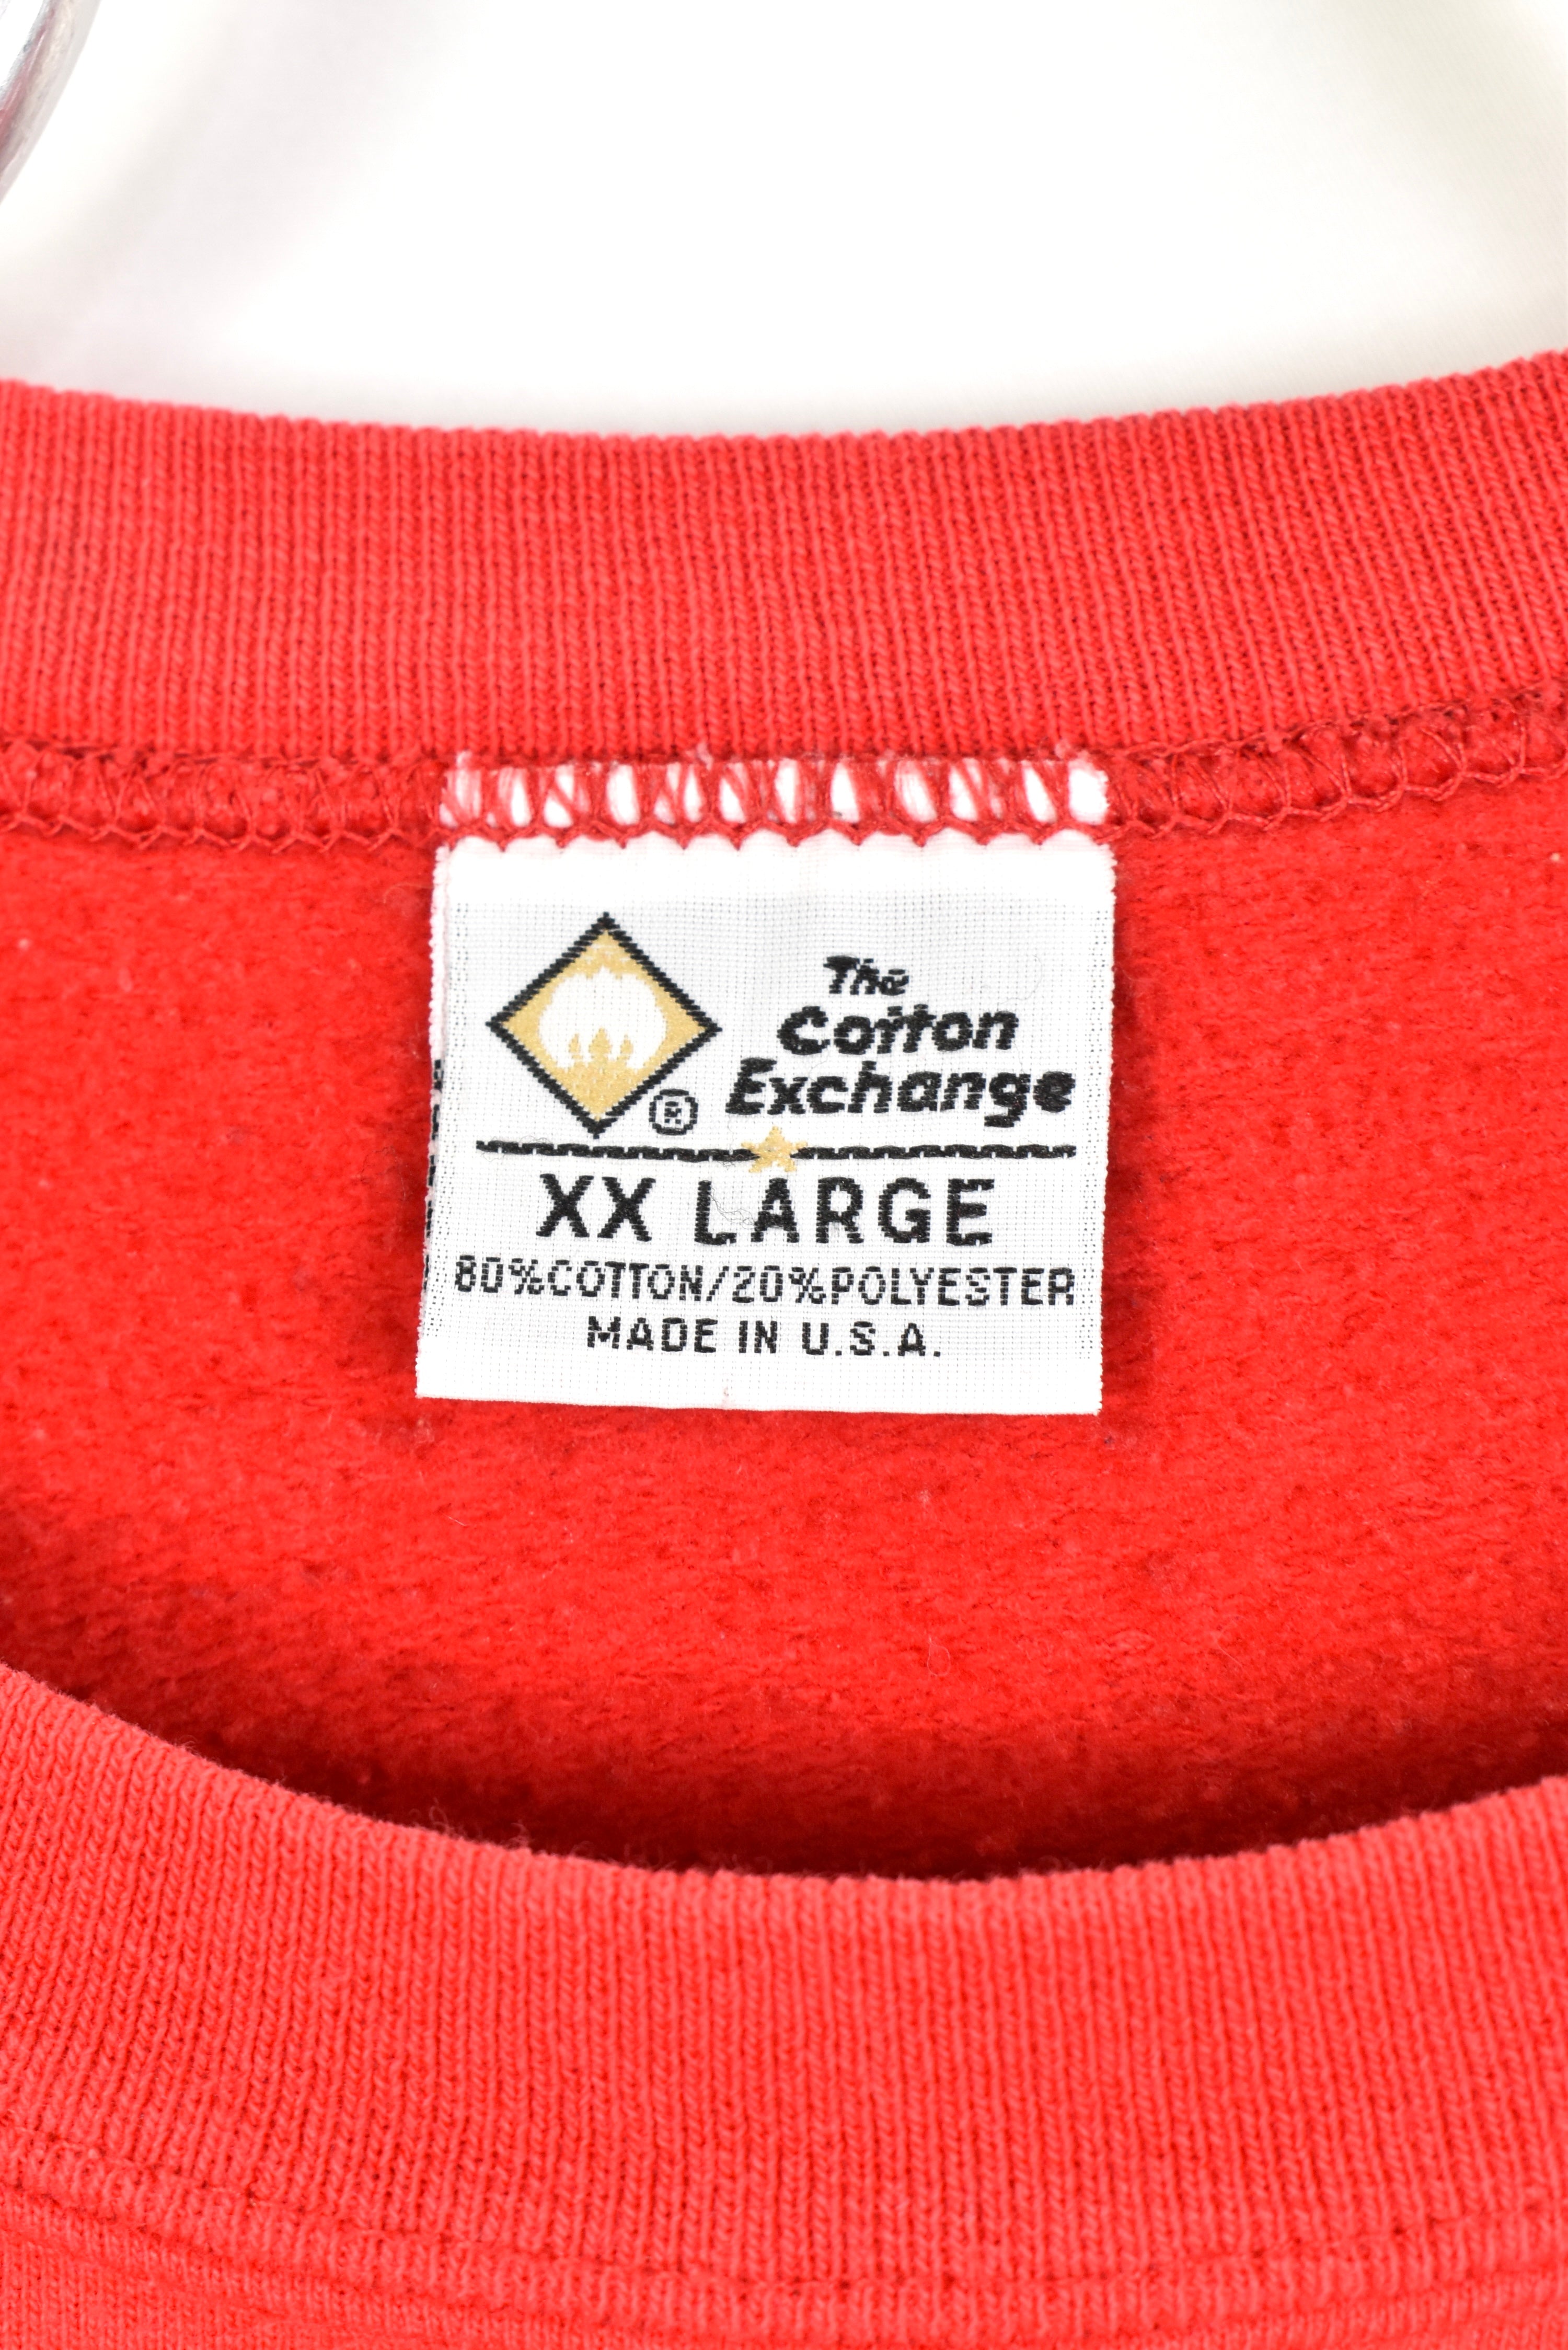 Vintage Ohio State University sweatshirt, 2002 Buckeyes embroidered crewneck - XXL, red COLLEGE